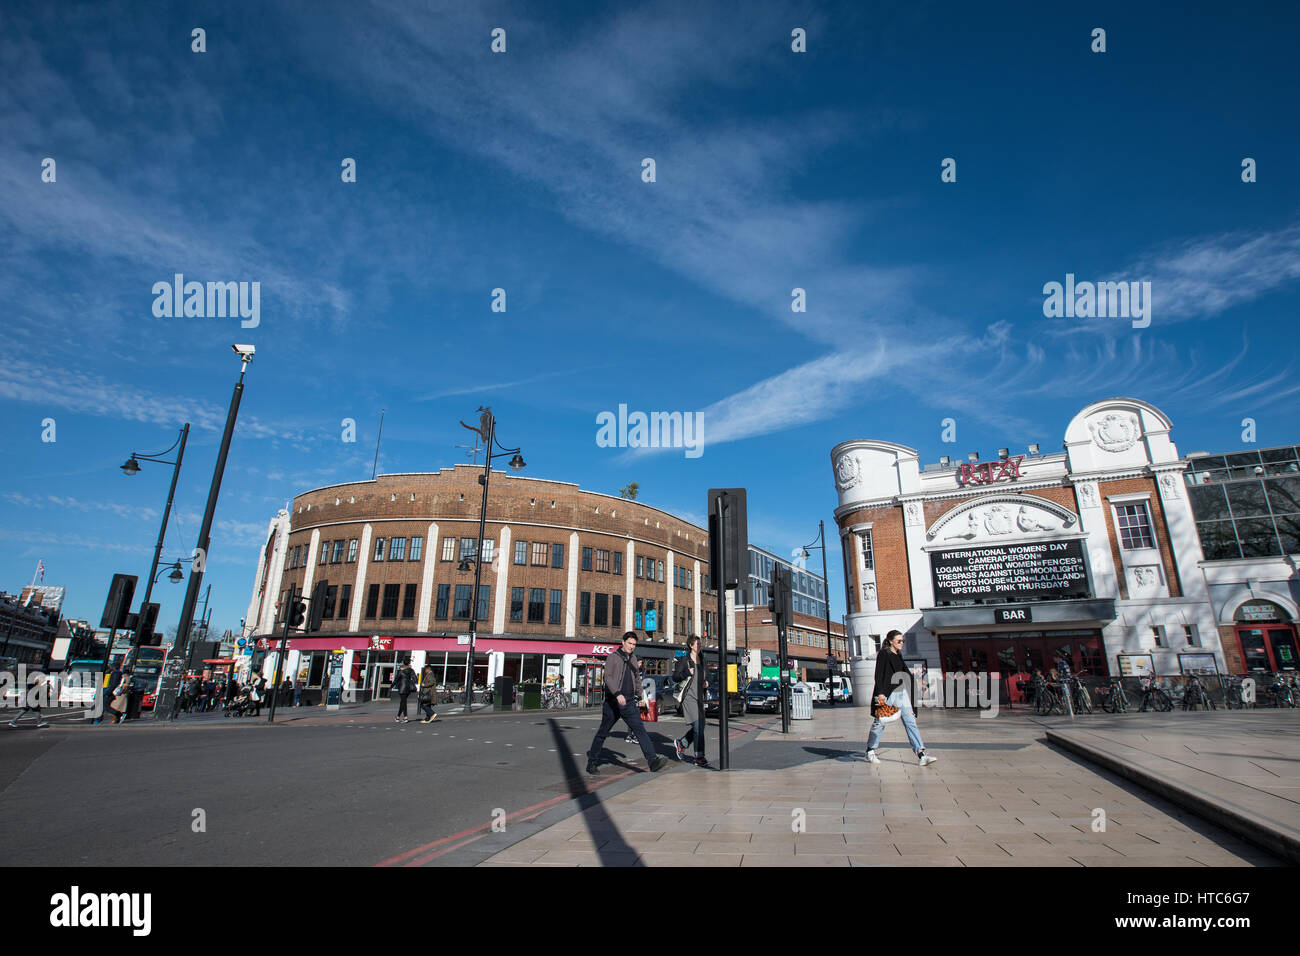 The Ritzy Cinema in Windrush Square in Brixton, London. Stock Photo